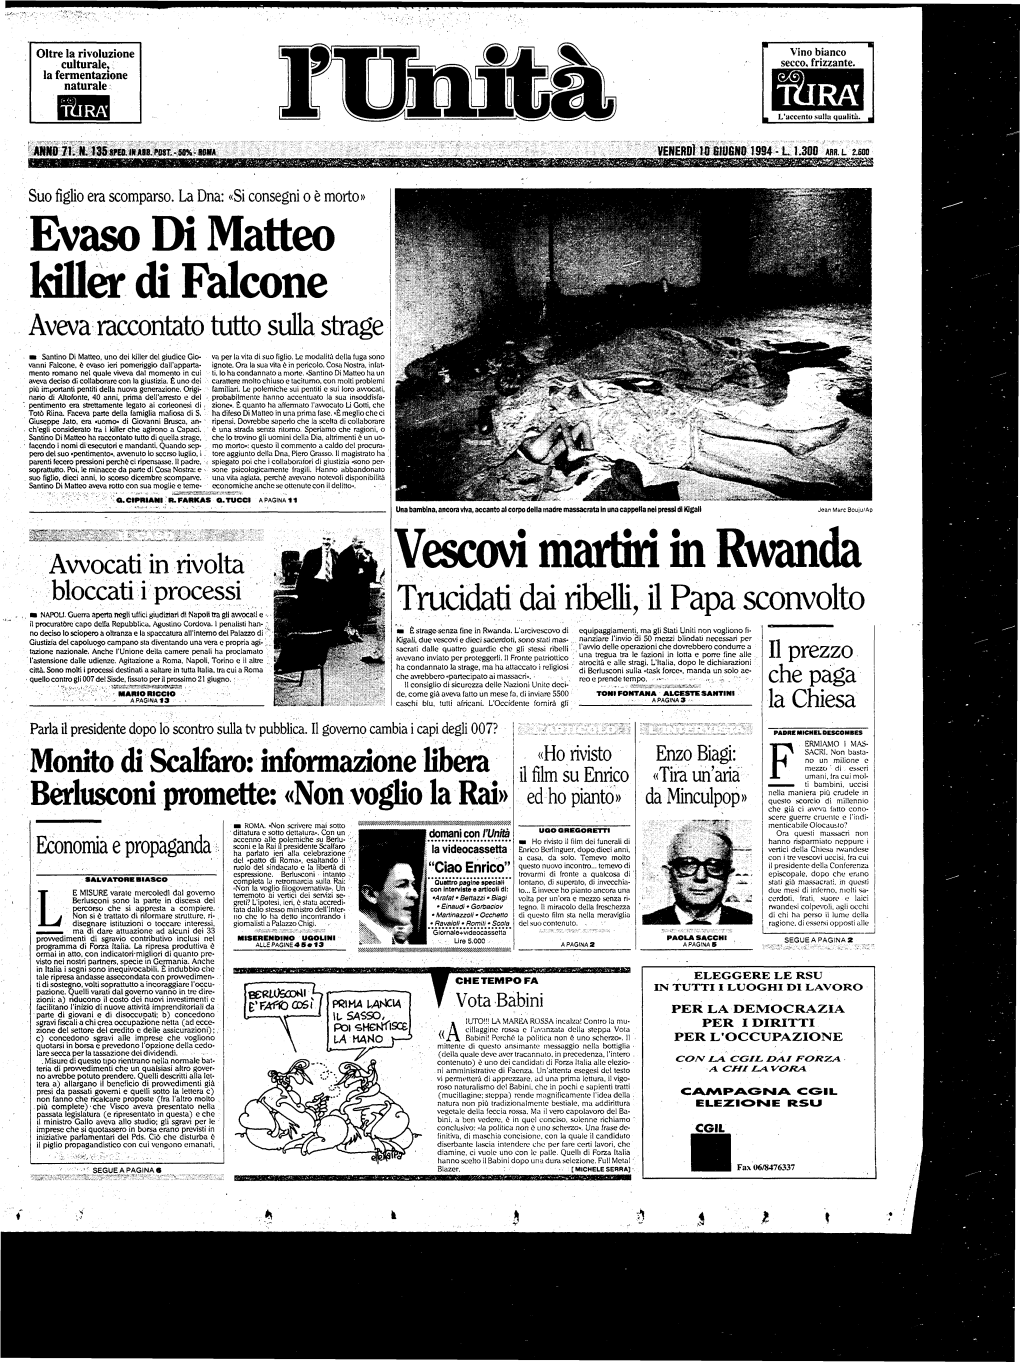 Evaso Di Matteo Killer Di Falcone Véscovi Martiri in Rwanda